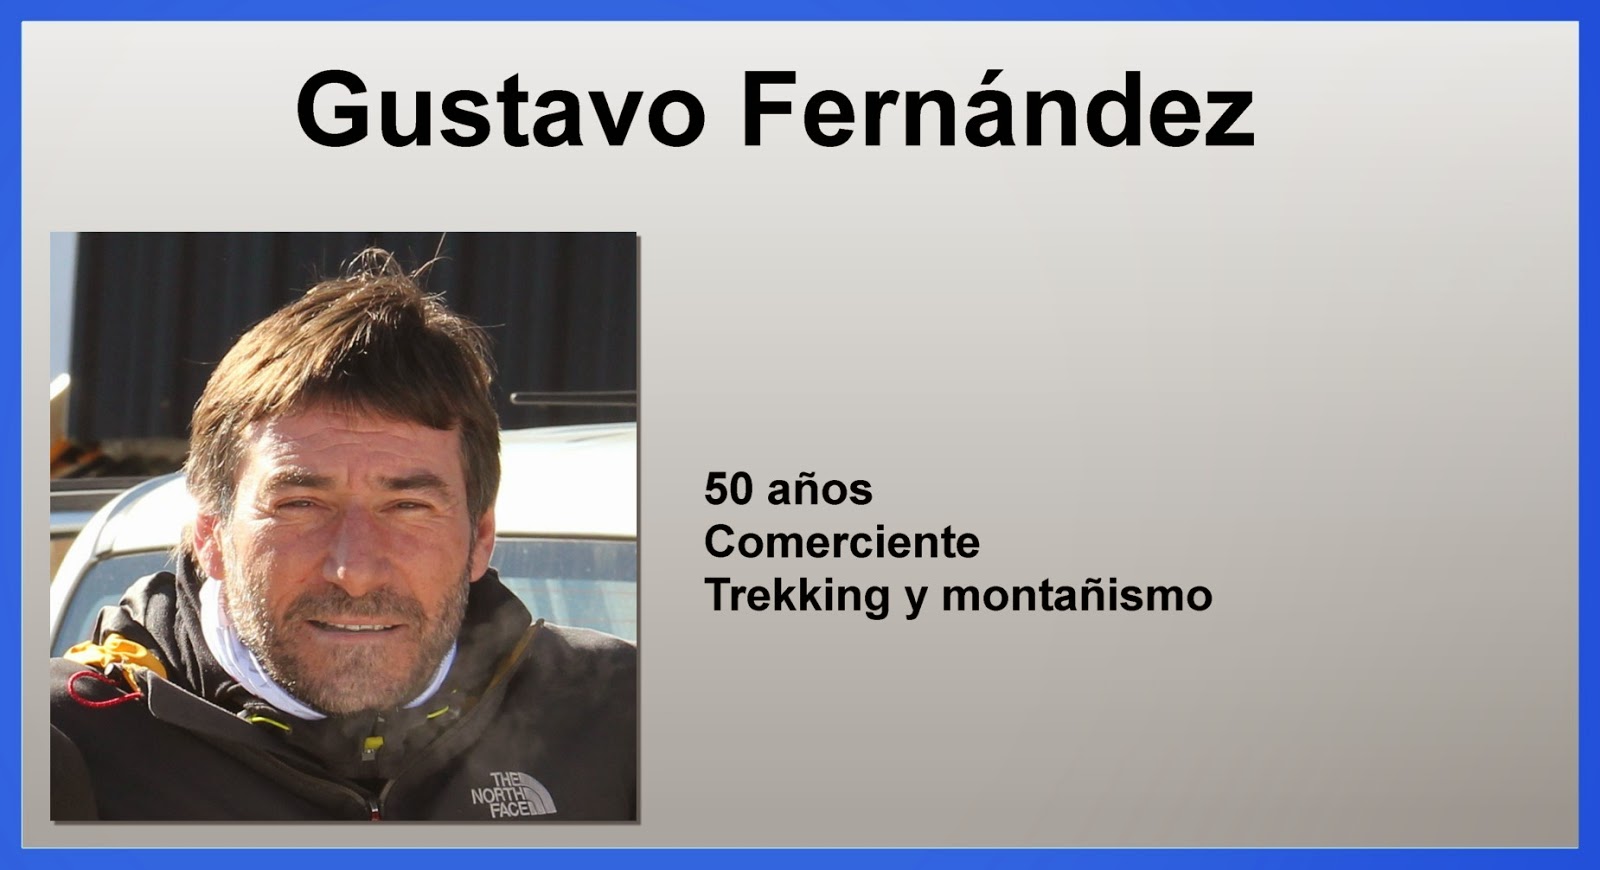 https://www.facebook.com/gustavo.fernandez.779205?fref=ts